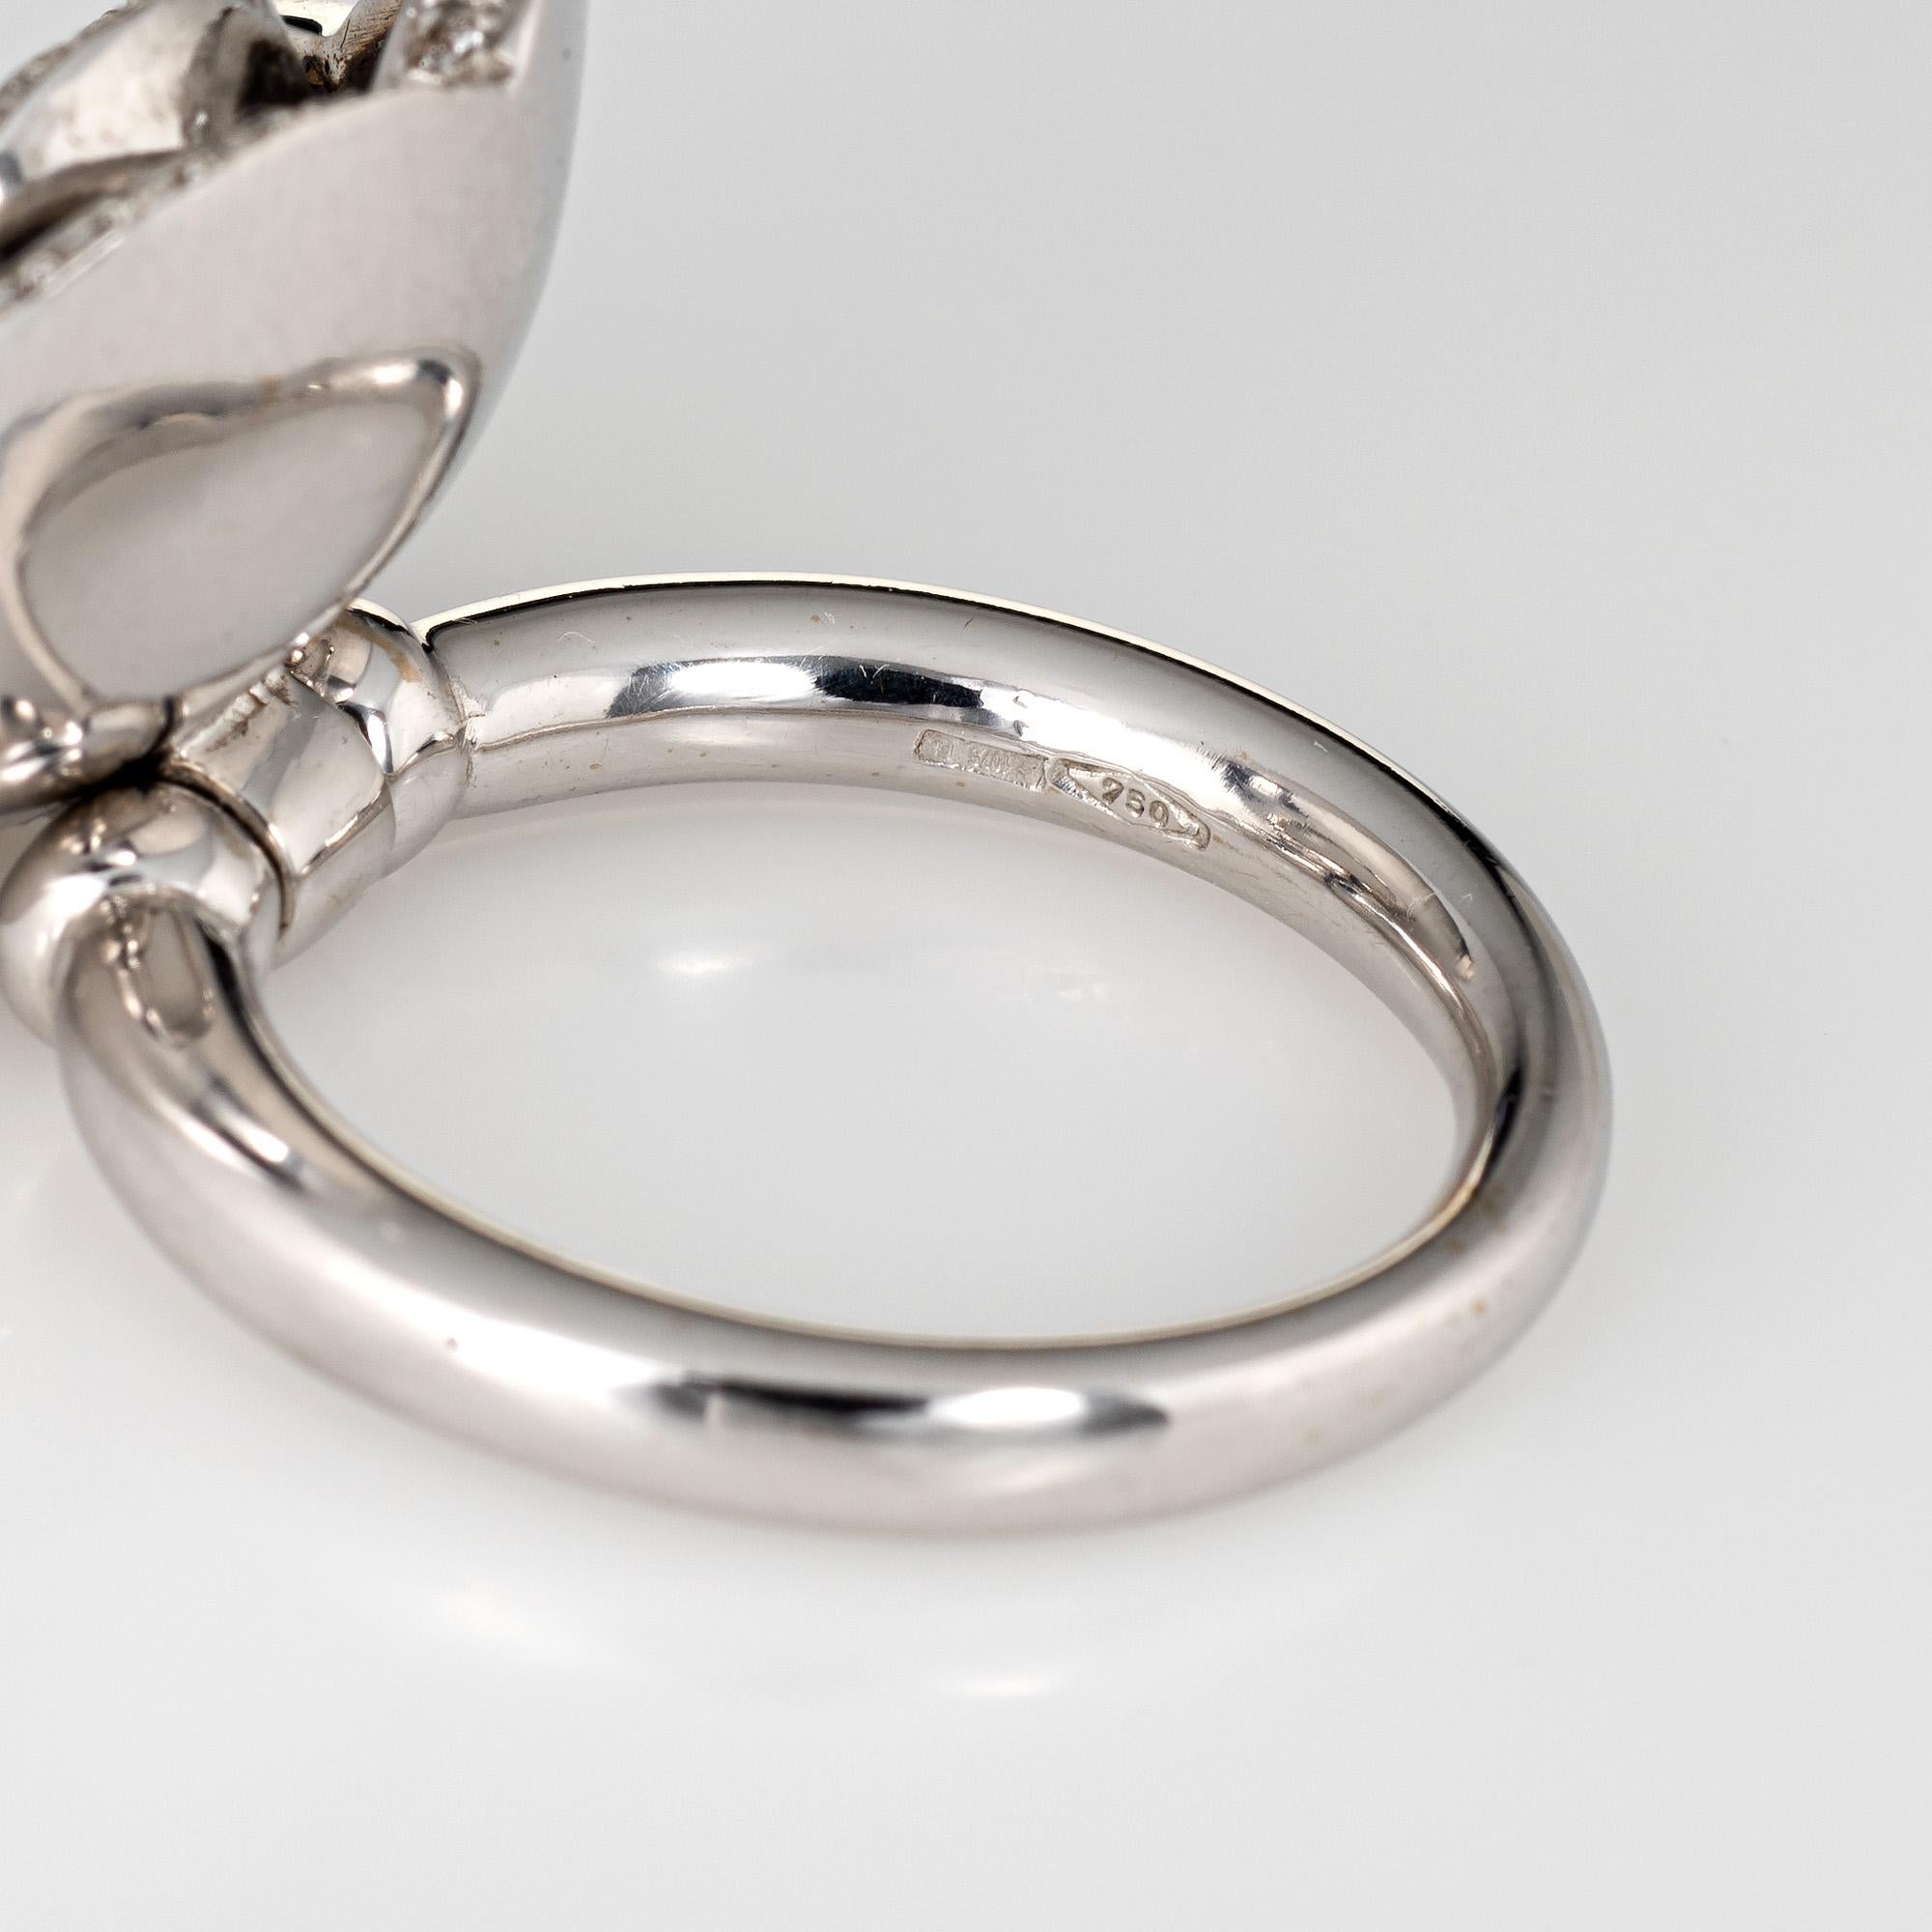 Movable Flower Diamond Ring Enamel Vintage Cocktail 18 Karat White Gold Jewelry 1